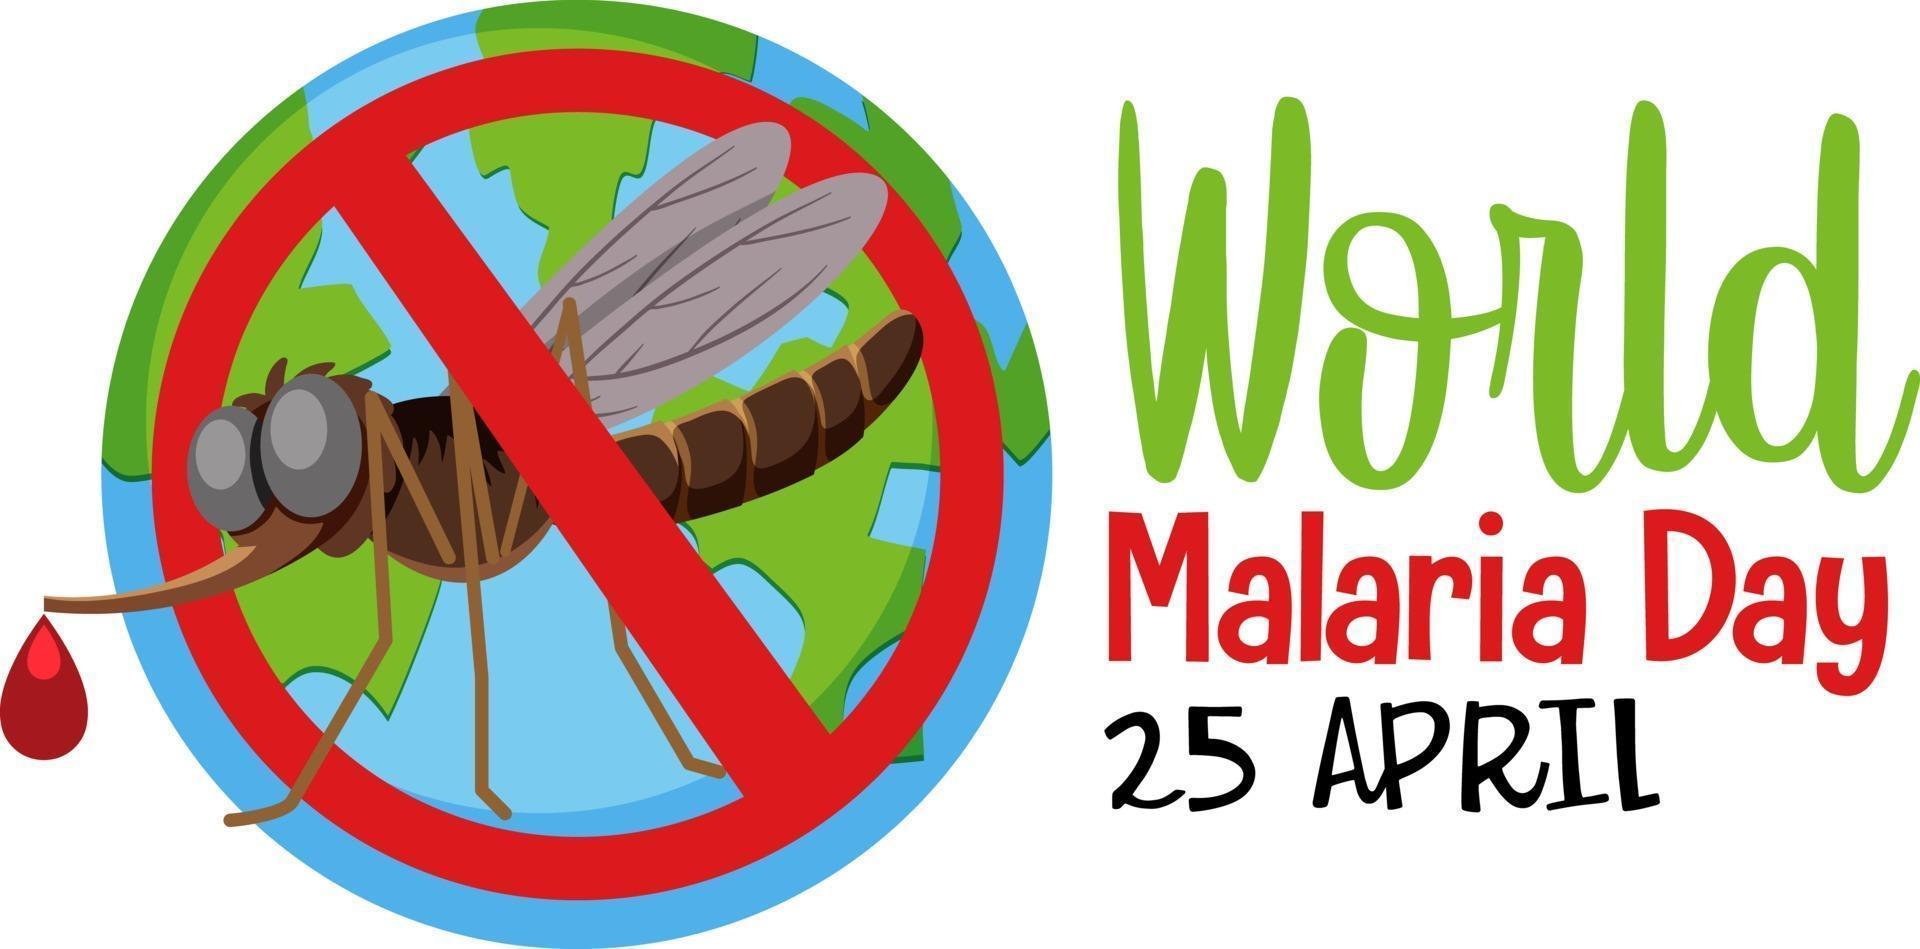 världs malariadag utan myggbanner vektor